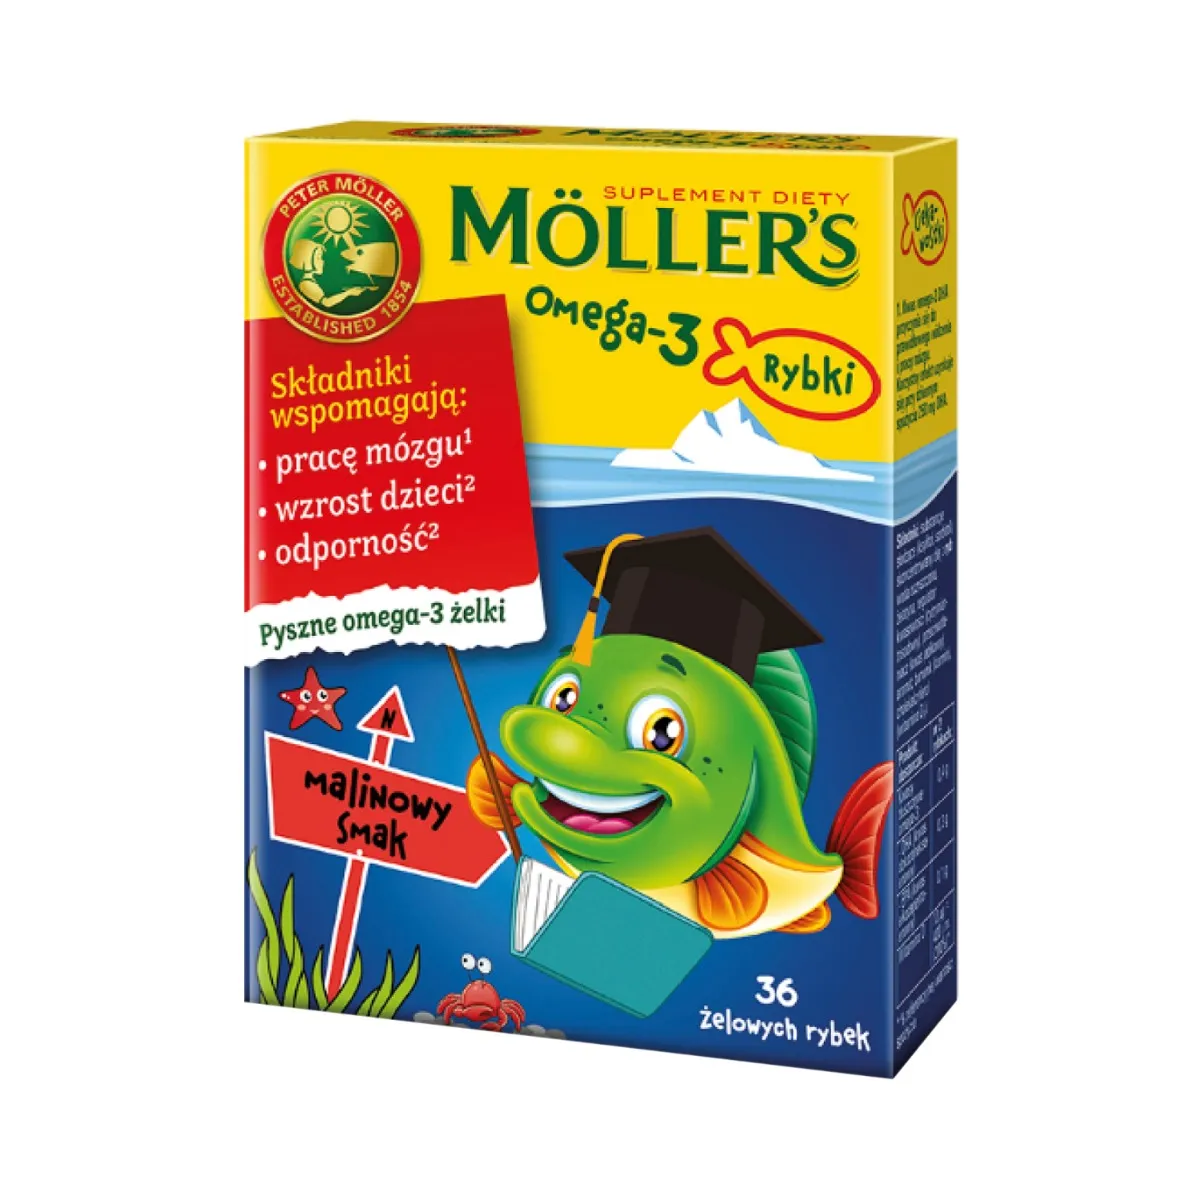 Mollers Omega-3 Rybki, suplement diety, smak malinowy, 36 żelki